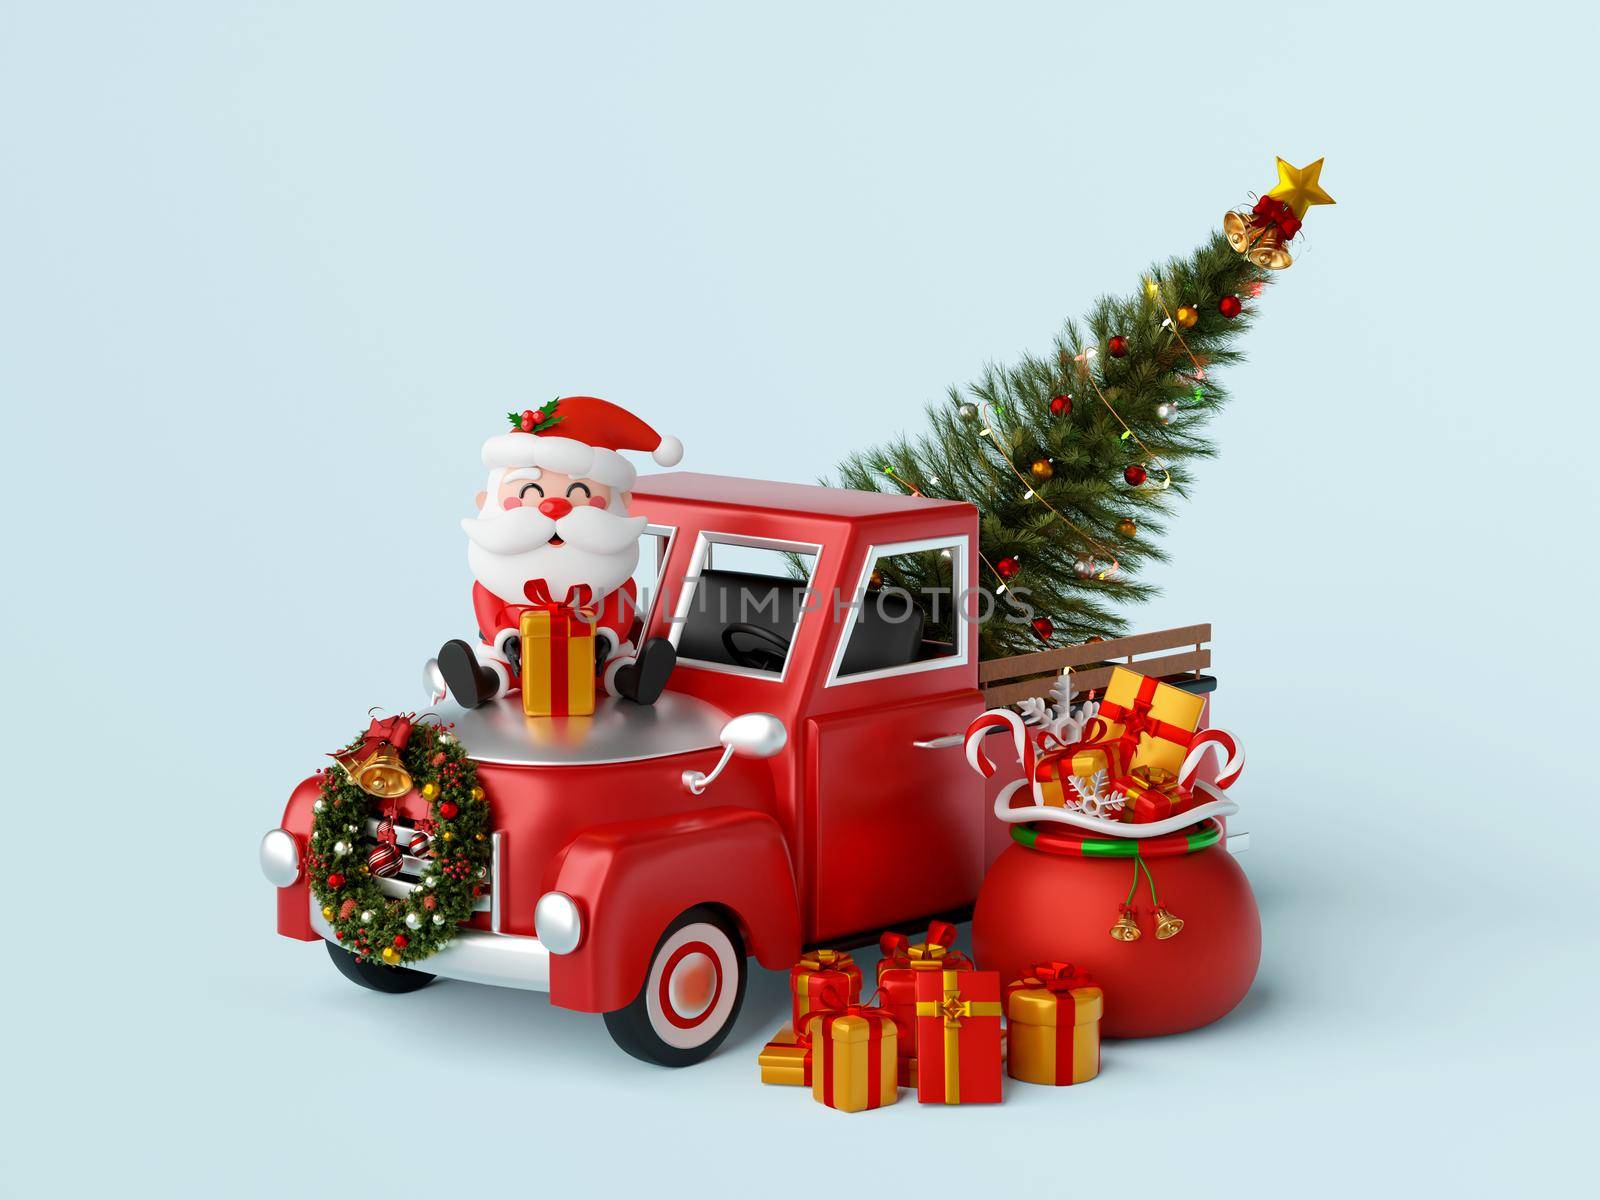 Santa Claus sit on Christmas truck carrying Christmas tree, 3d illustration by nutzchotwarut